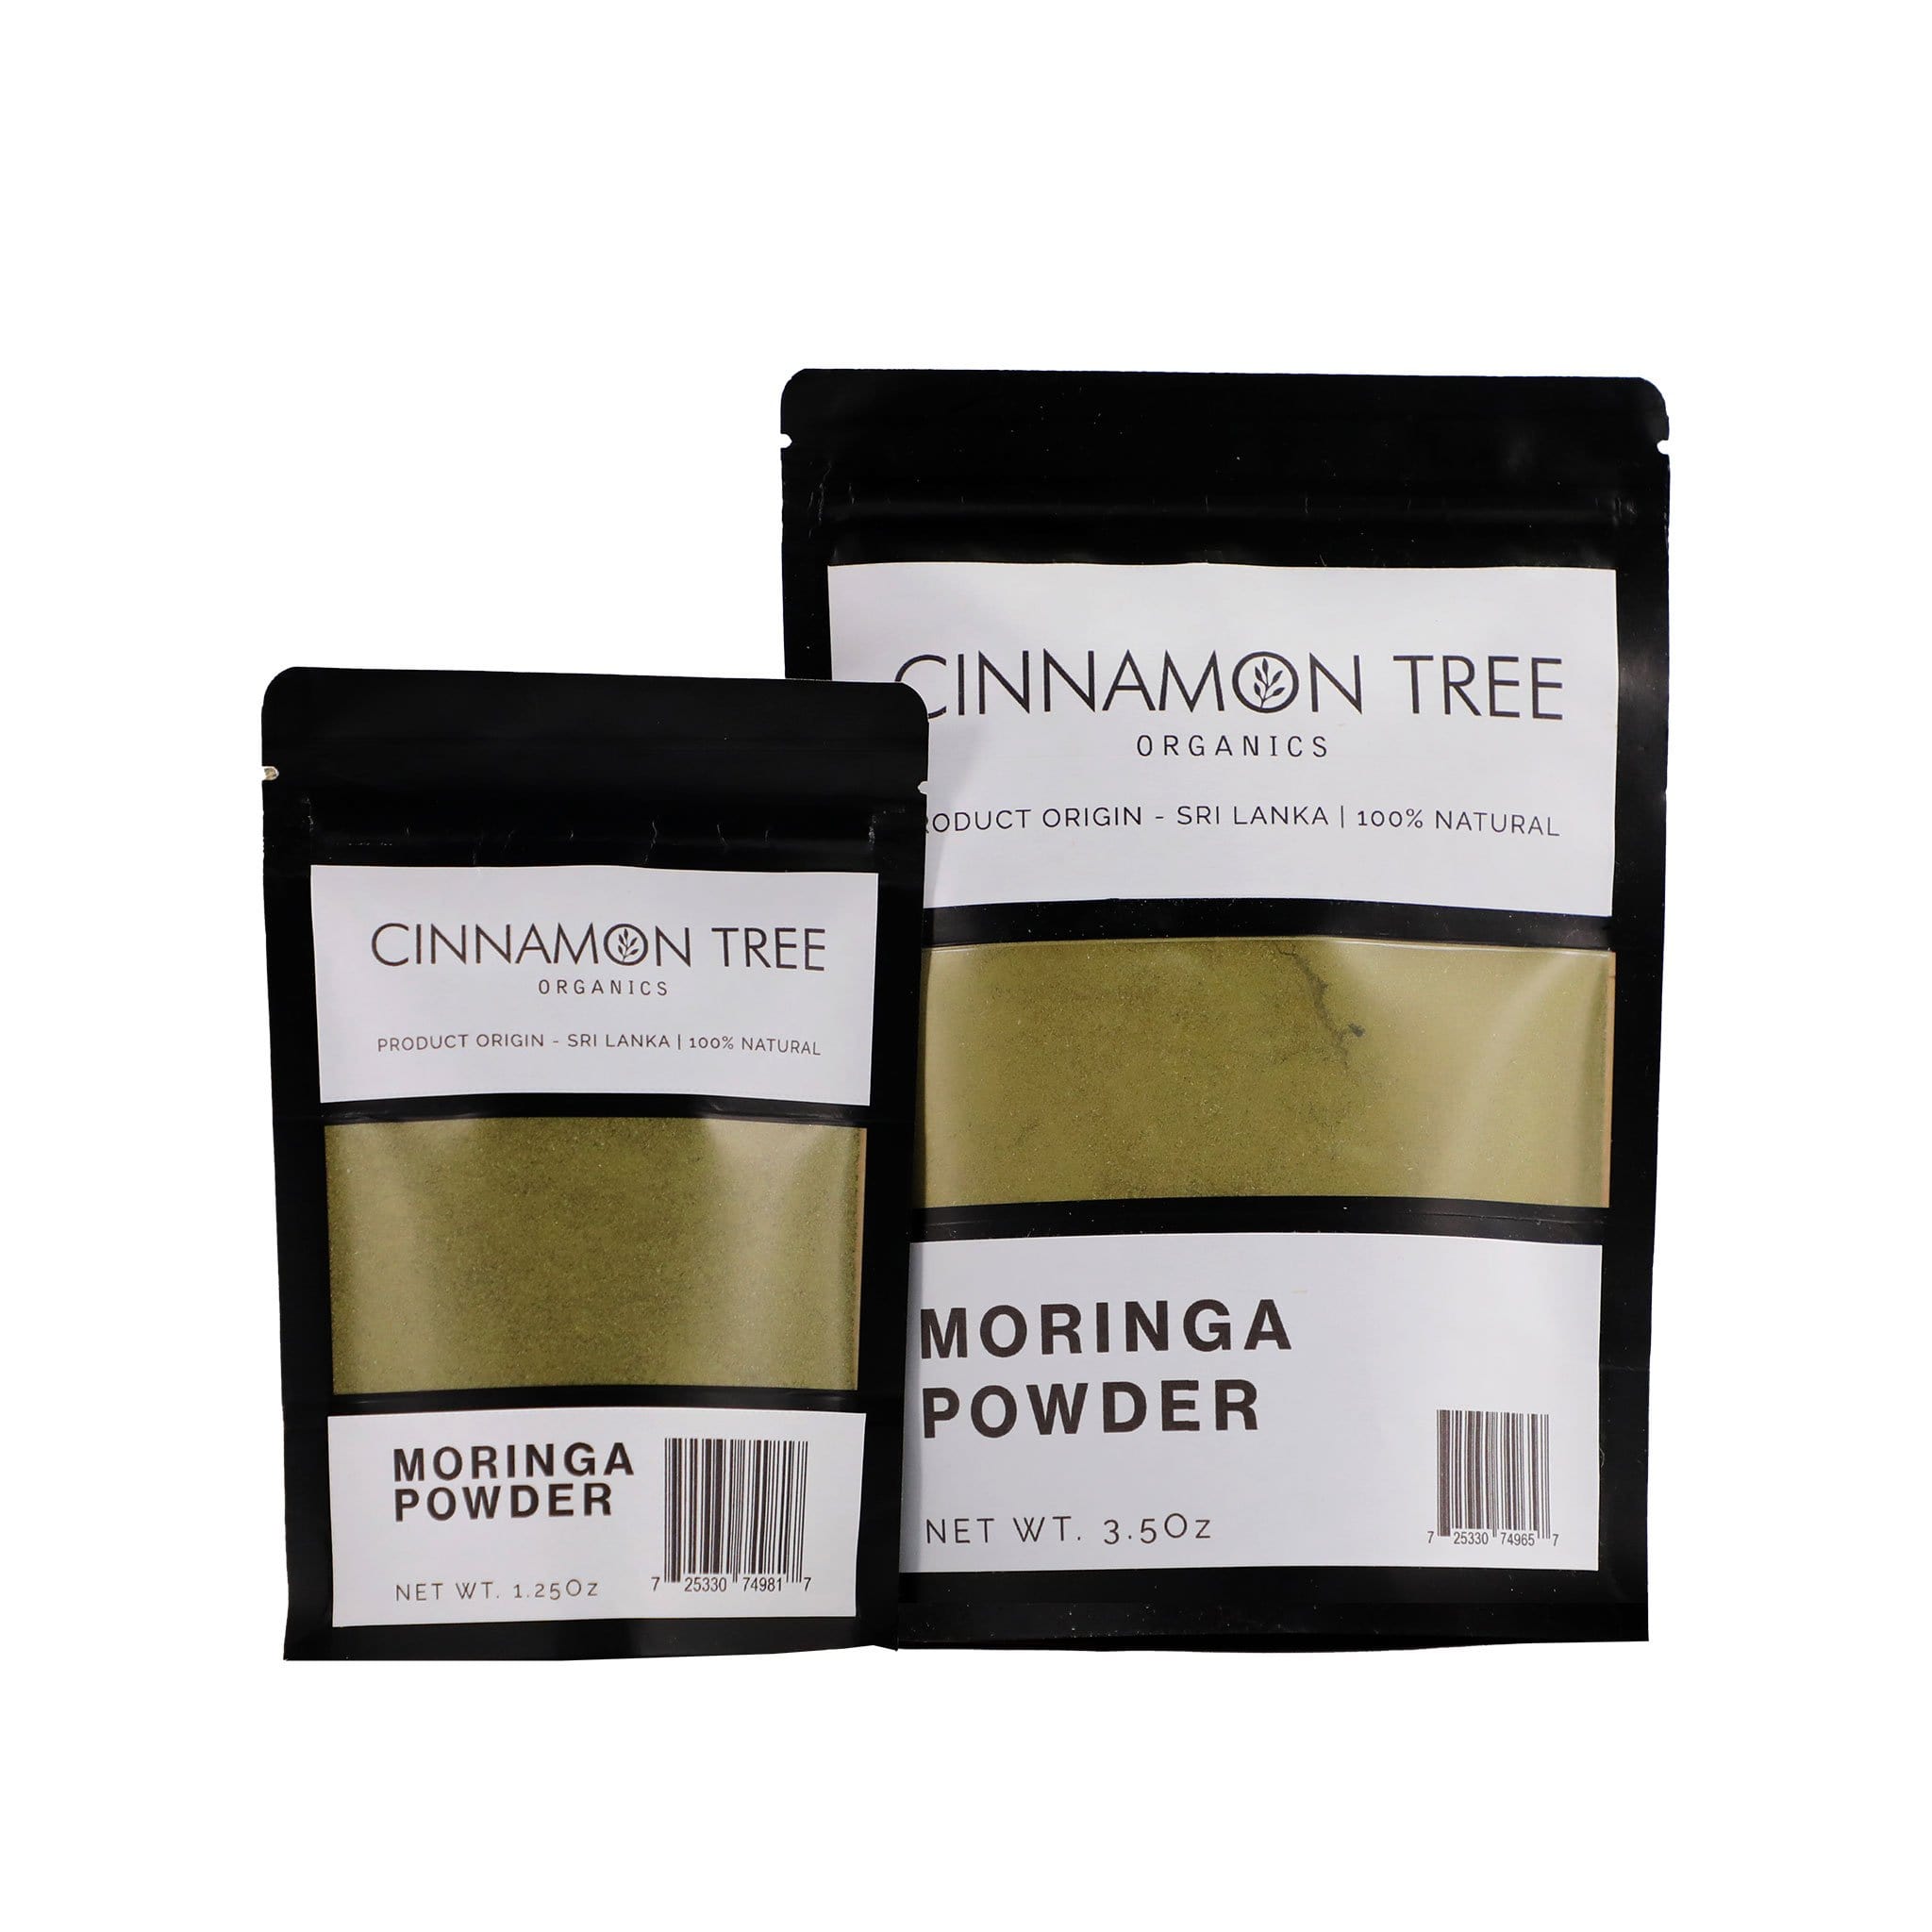 Cinnamon Tree Organics organically grown moringa powder packs